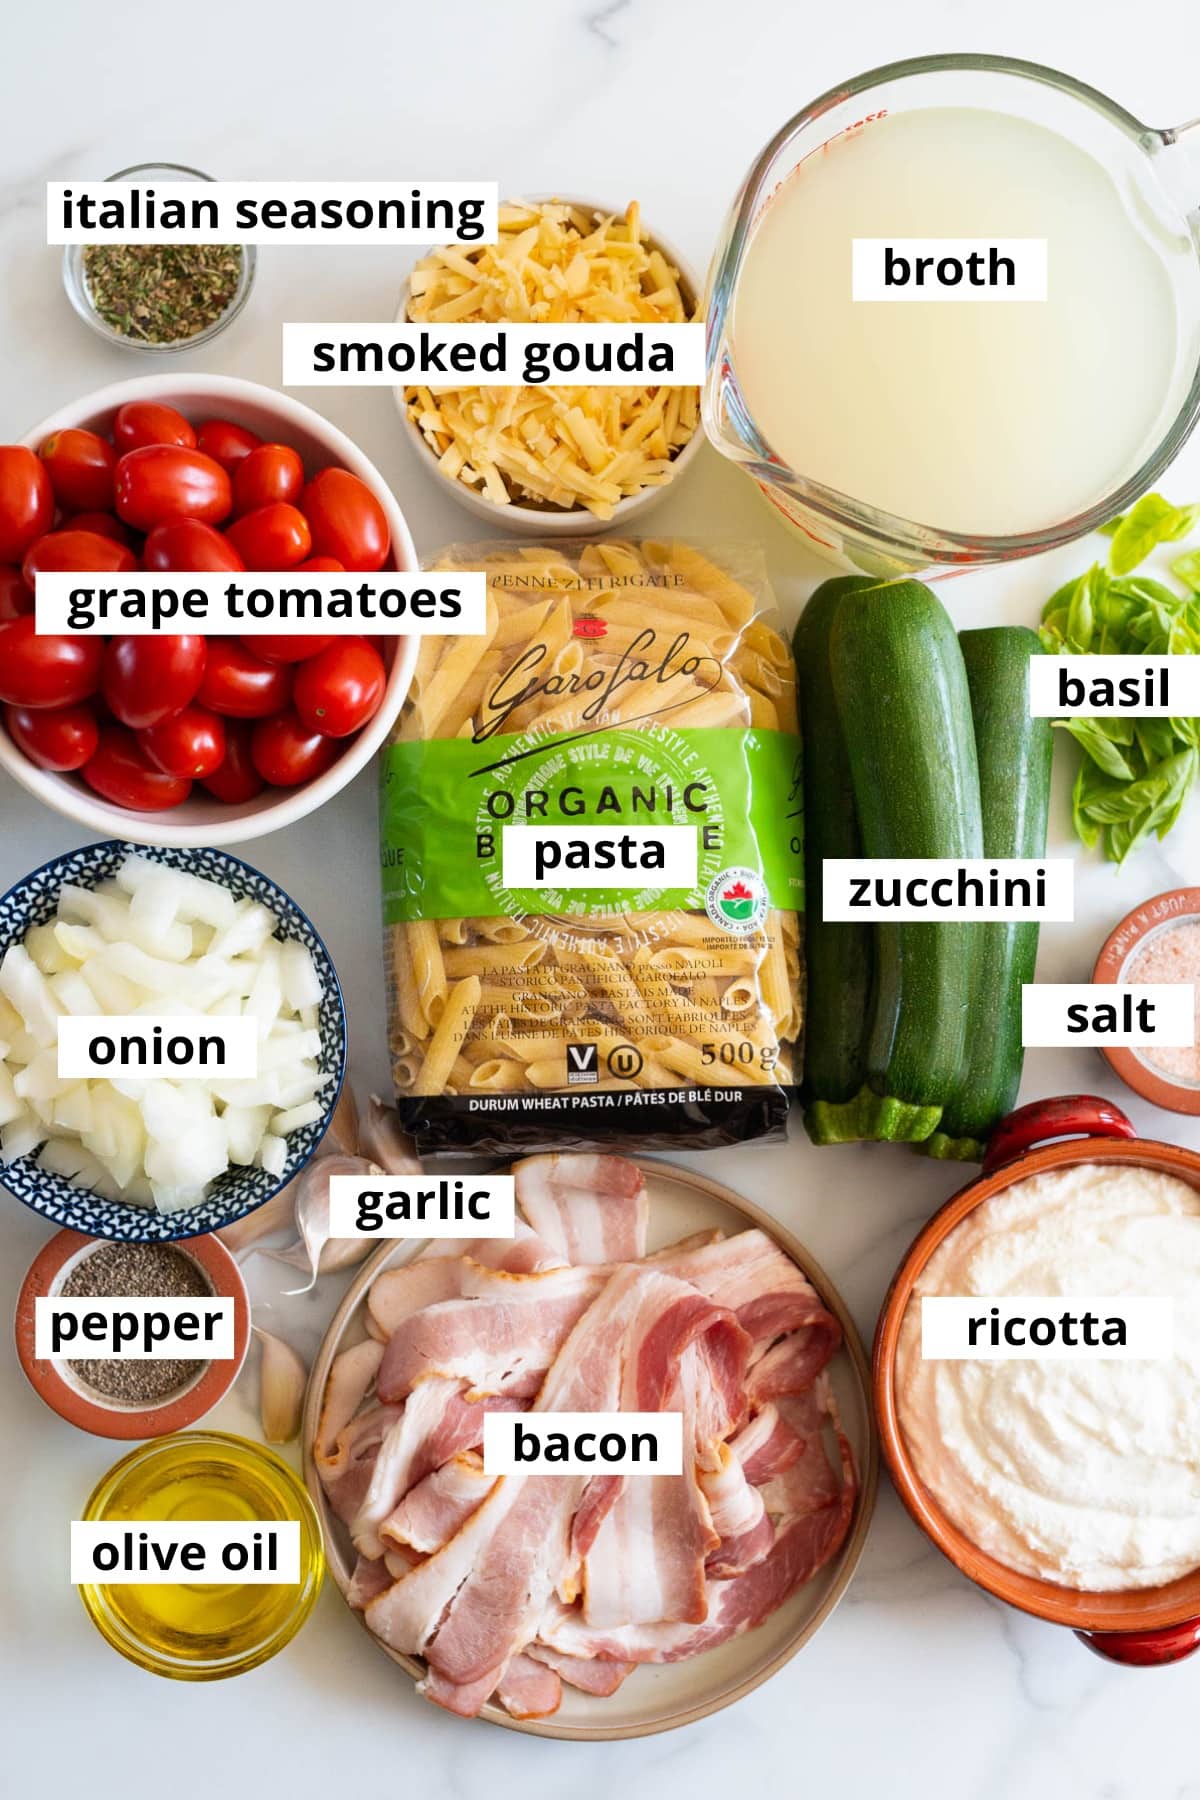 Pasta, grape tomatoes, smoked gouda cheese, Italian seasoning, broth, zucchini, basil, onion, garlic, salt, bacon, ricotta, pepper and olive oil.